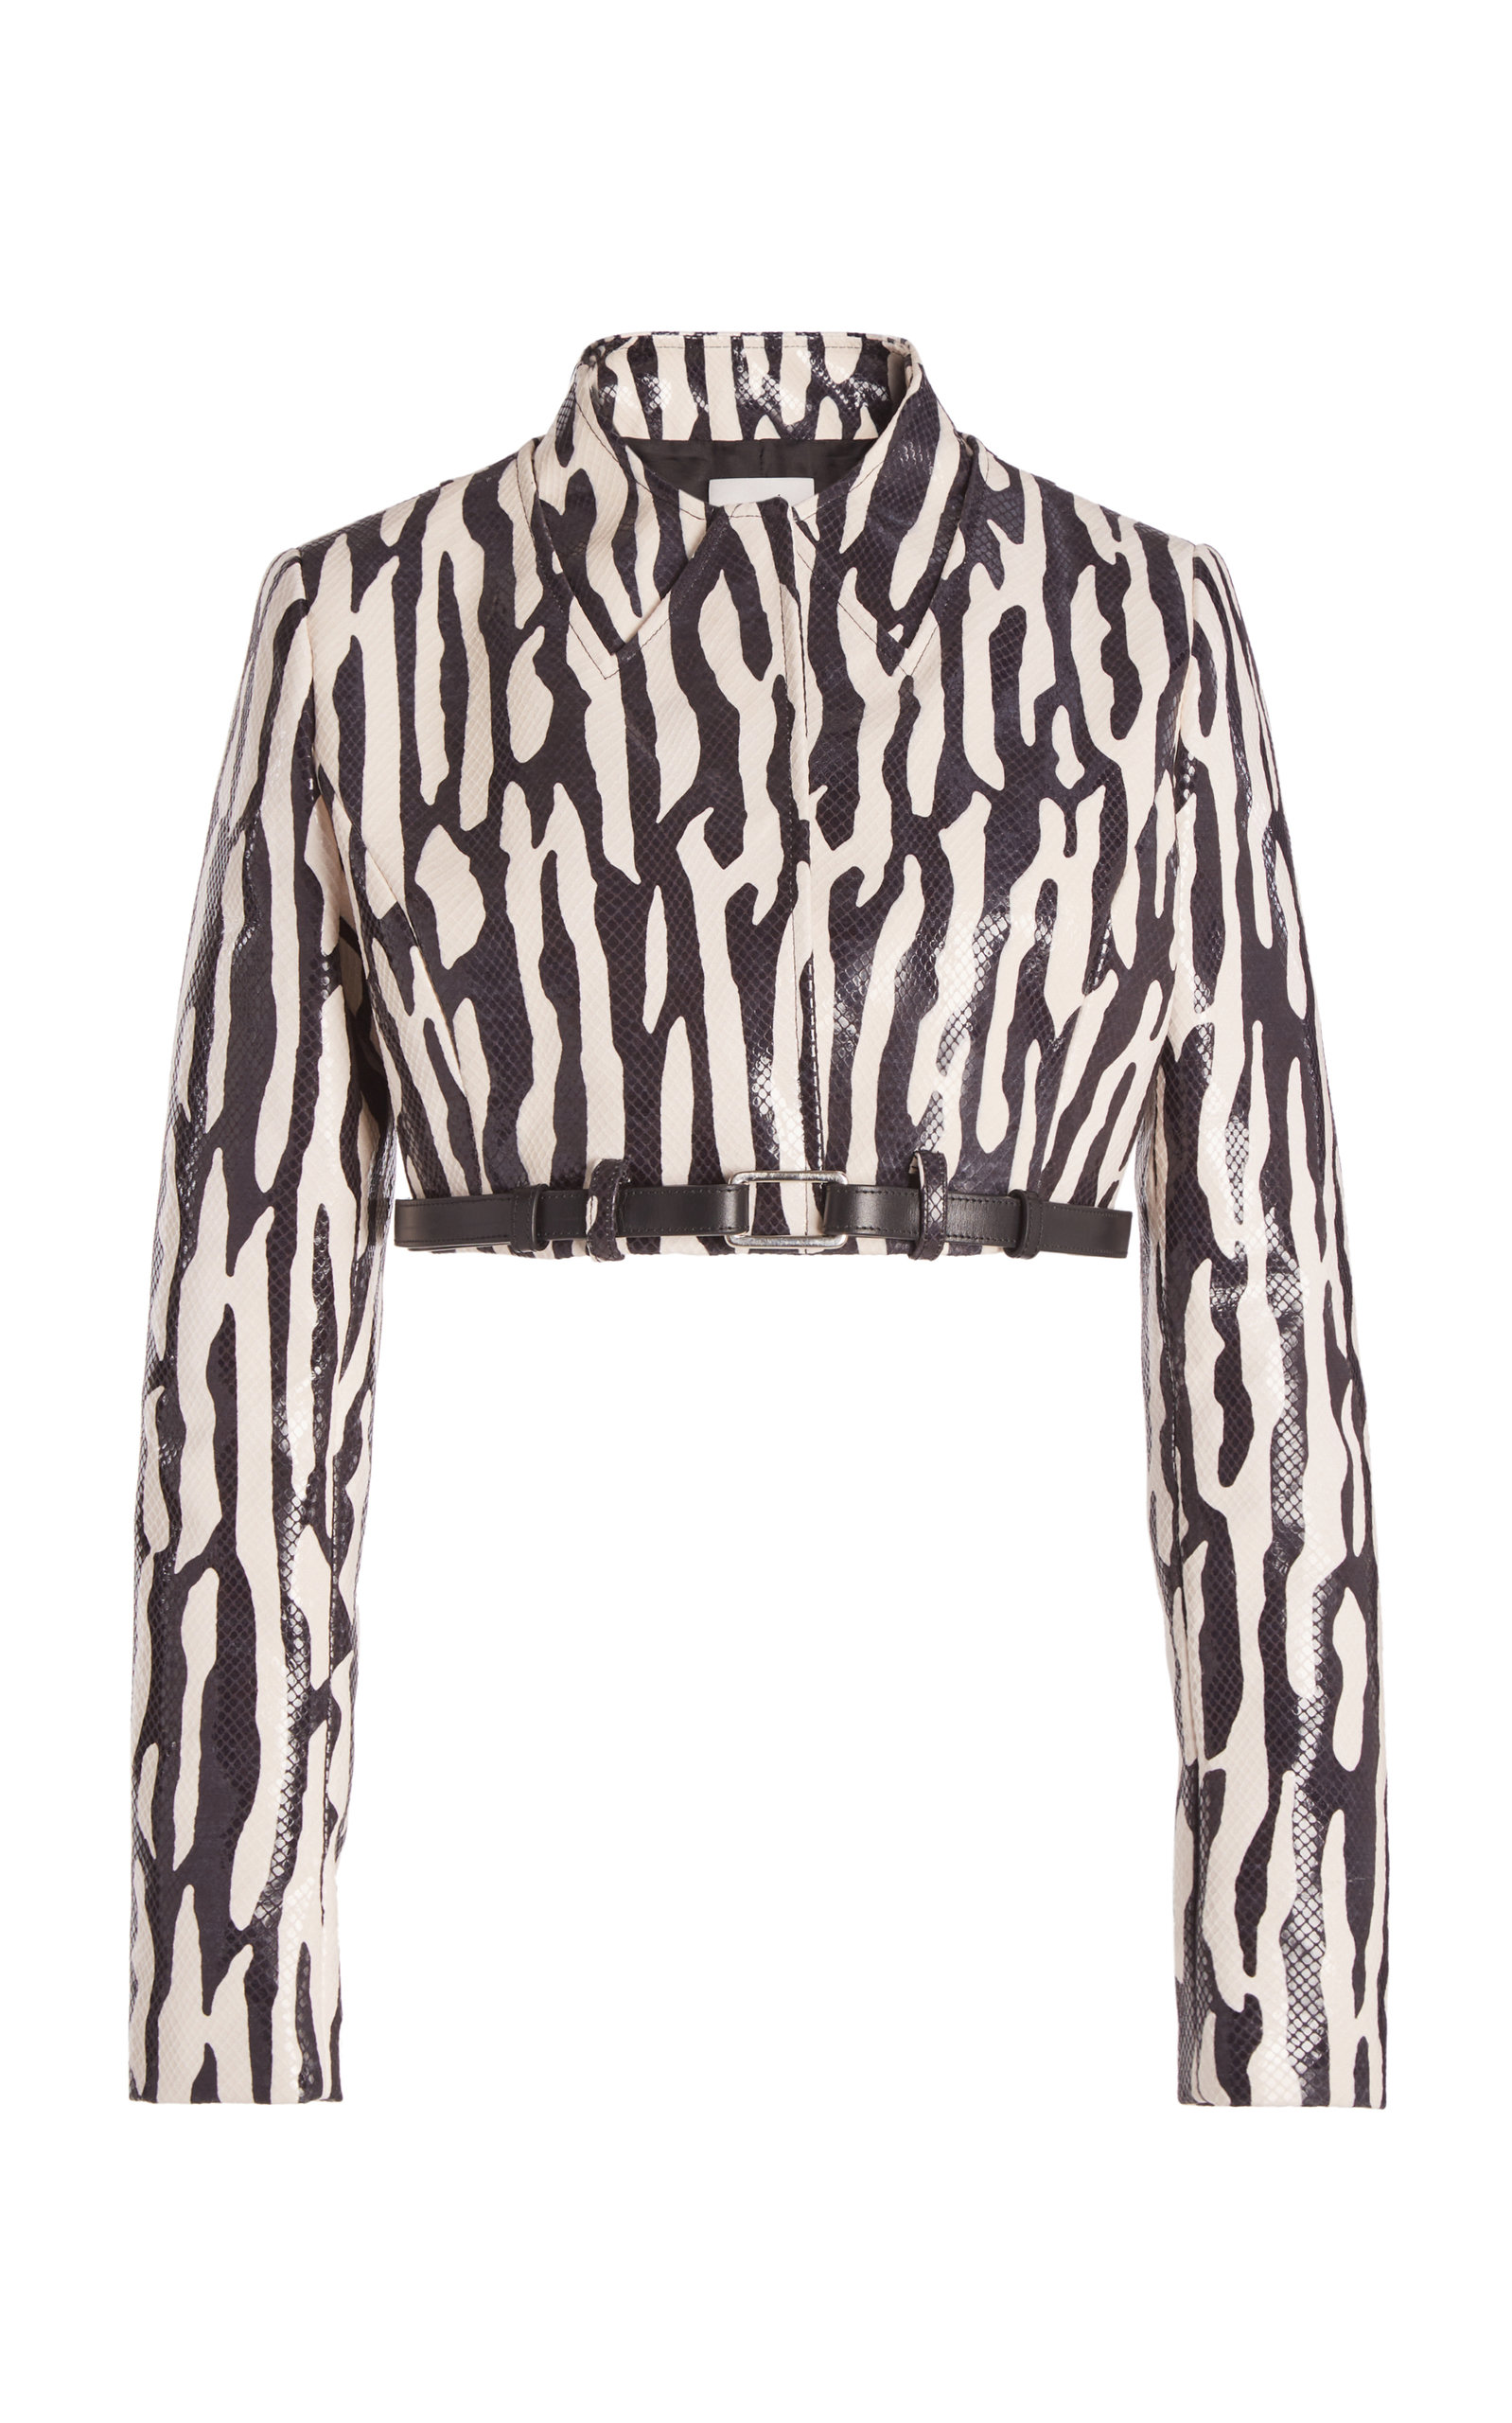 Coperni - Women's Zebra Print Cropped Jacket - Black/white - Only At Moda Operandi